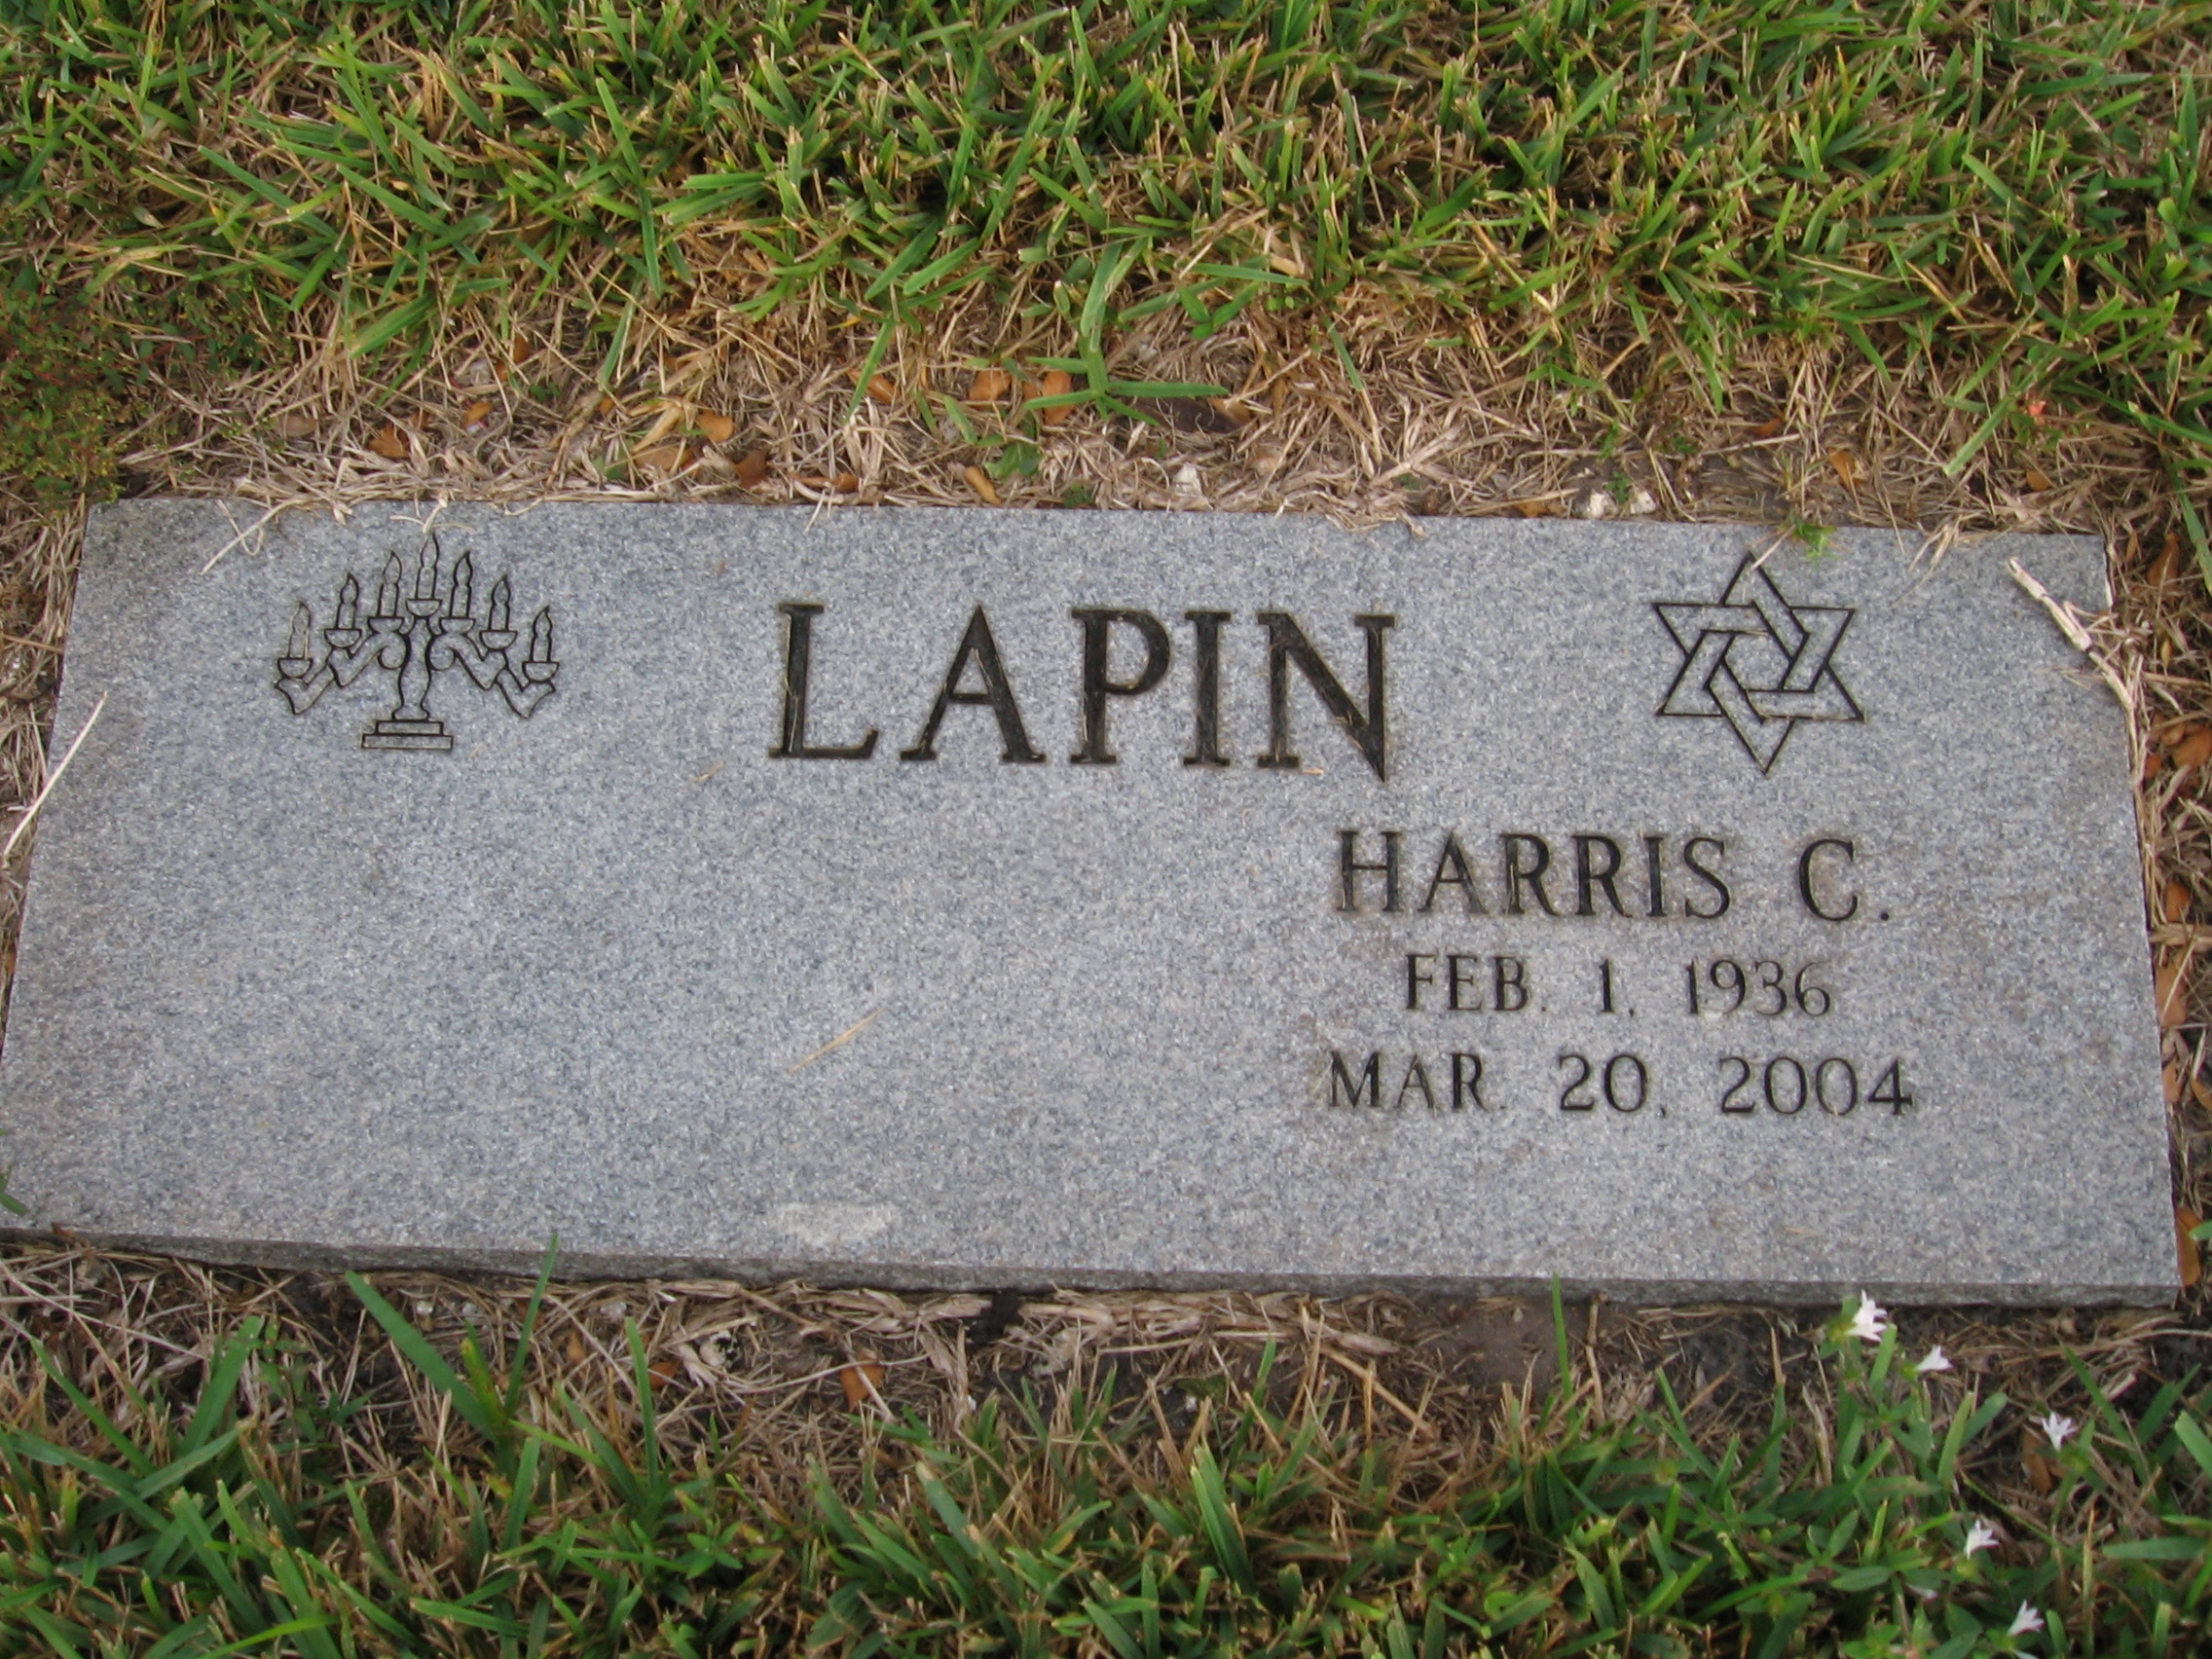 Harris C Lapin